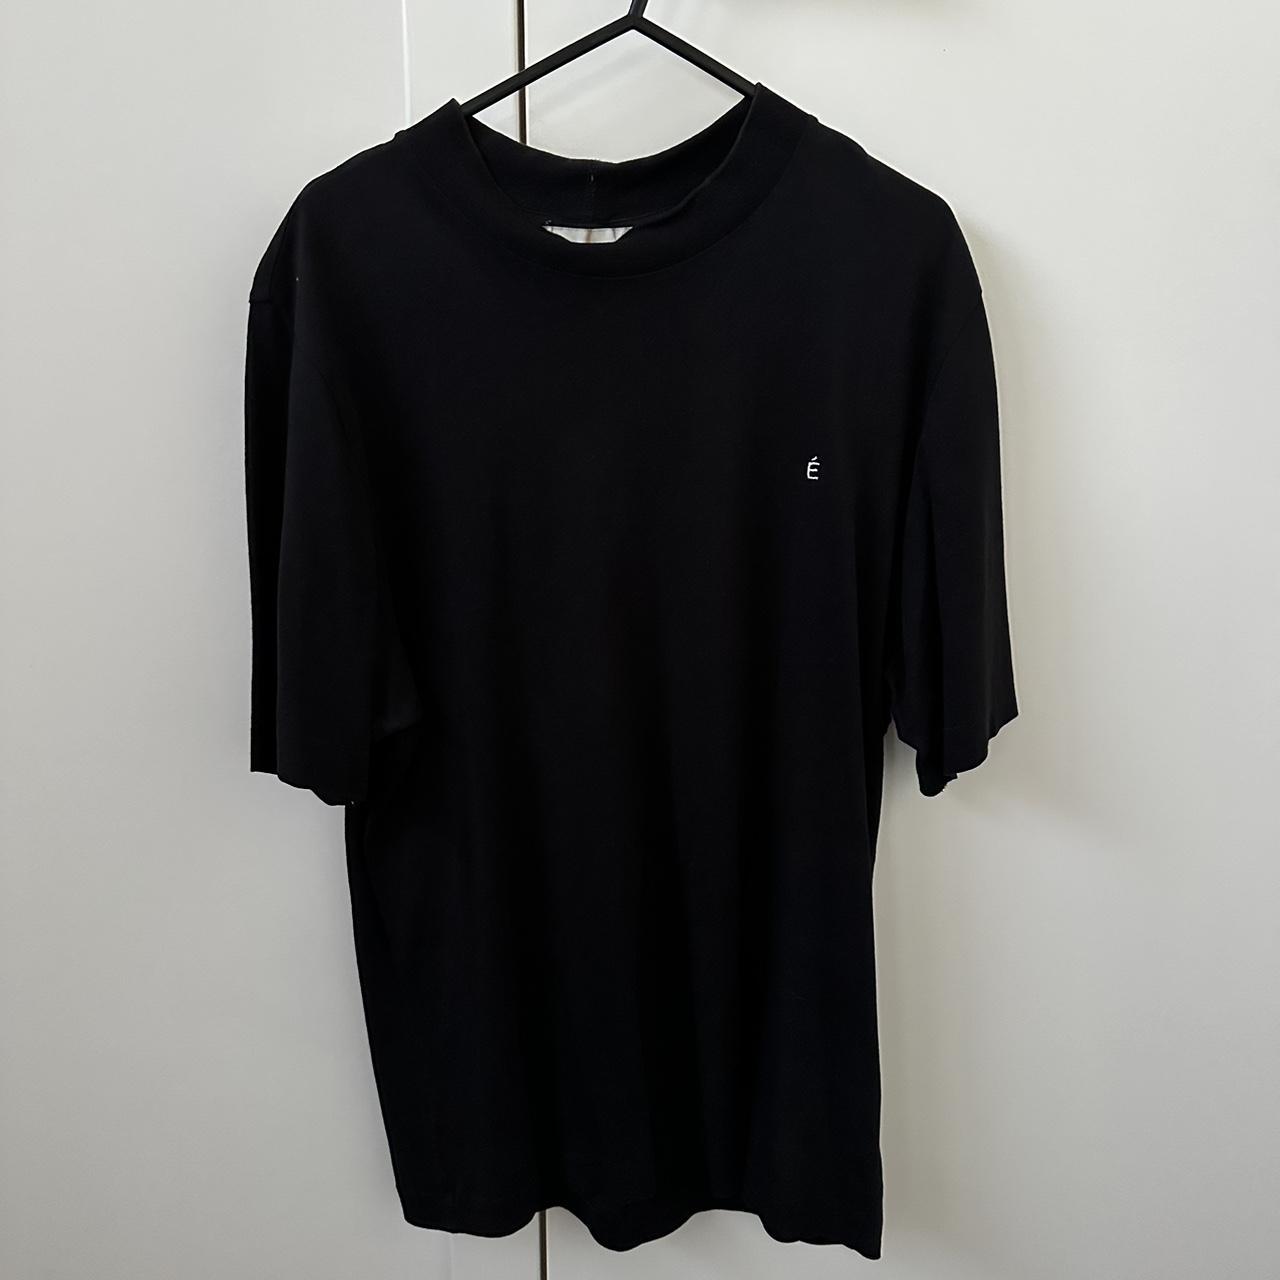 Etudes logo tshirt black size S Official brand... - Depop